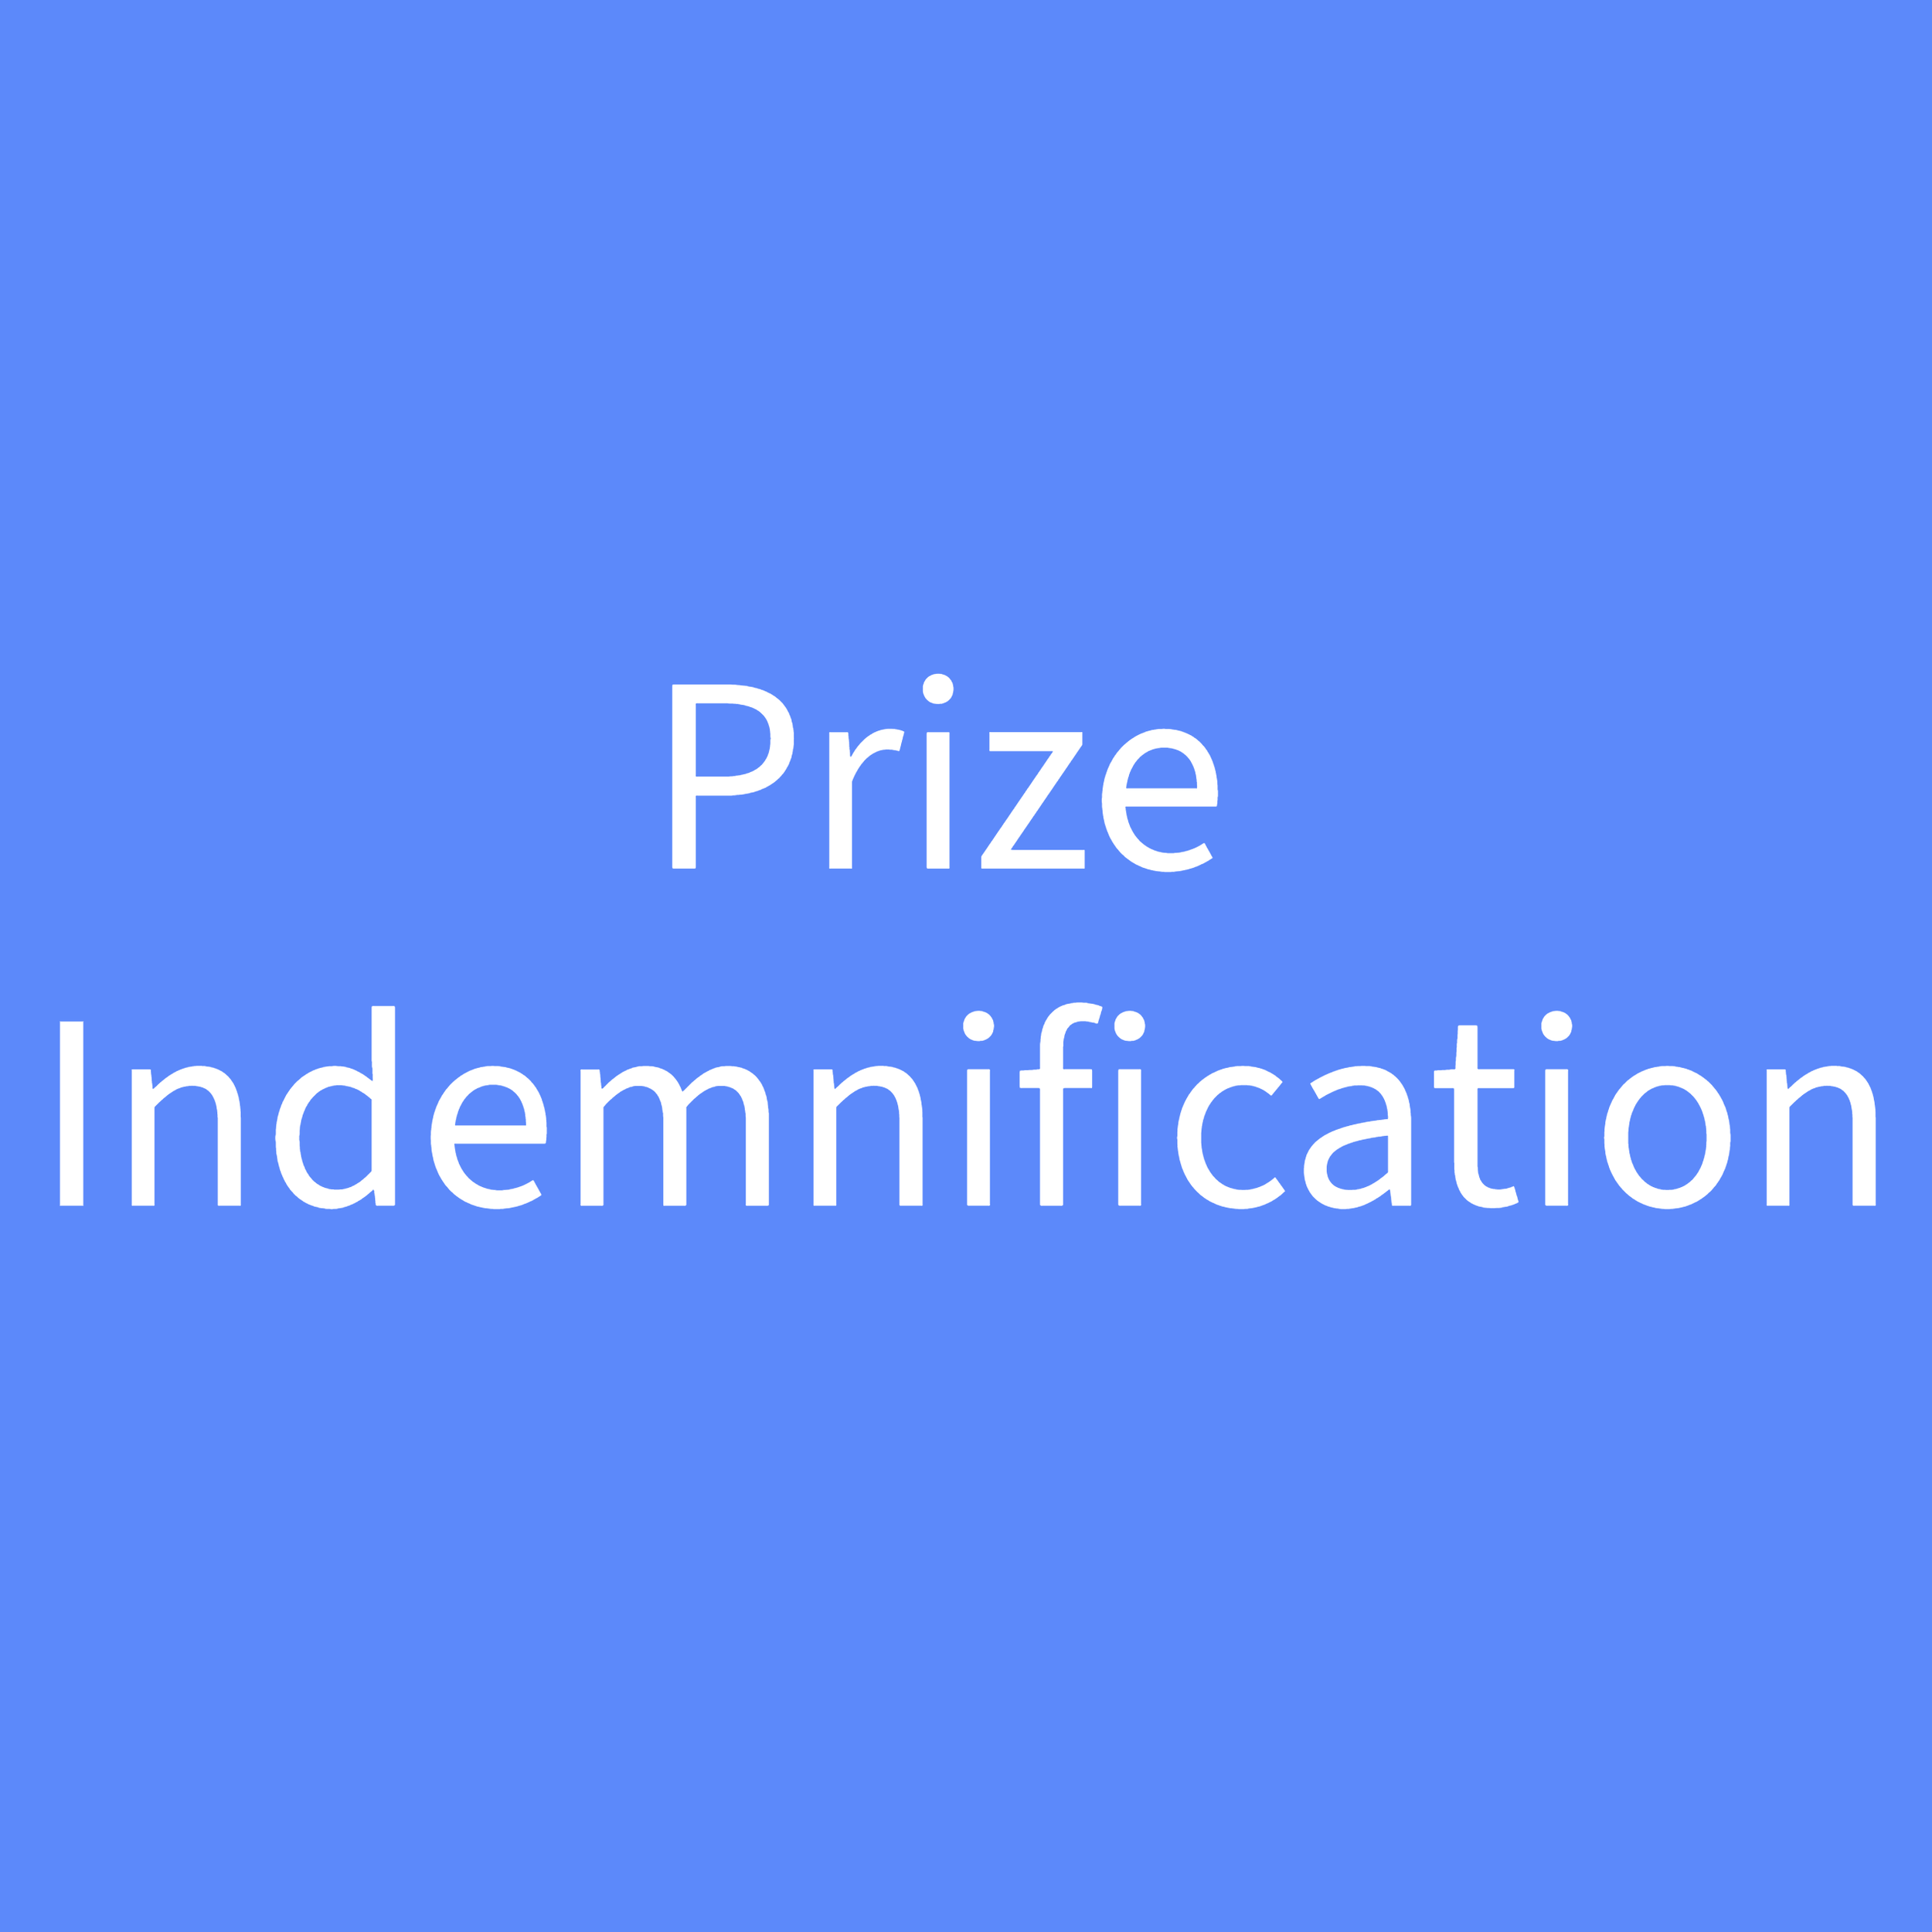 Prize Indemnification